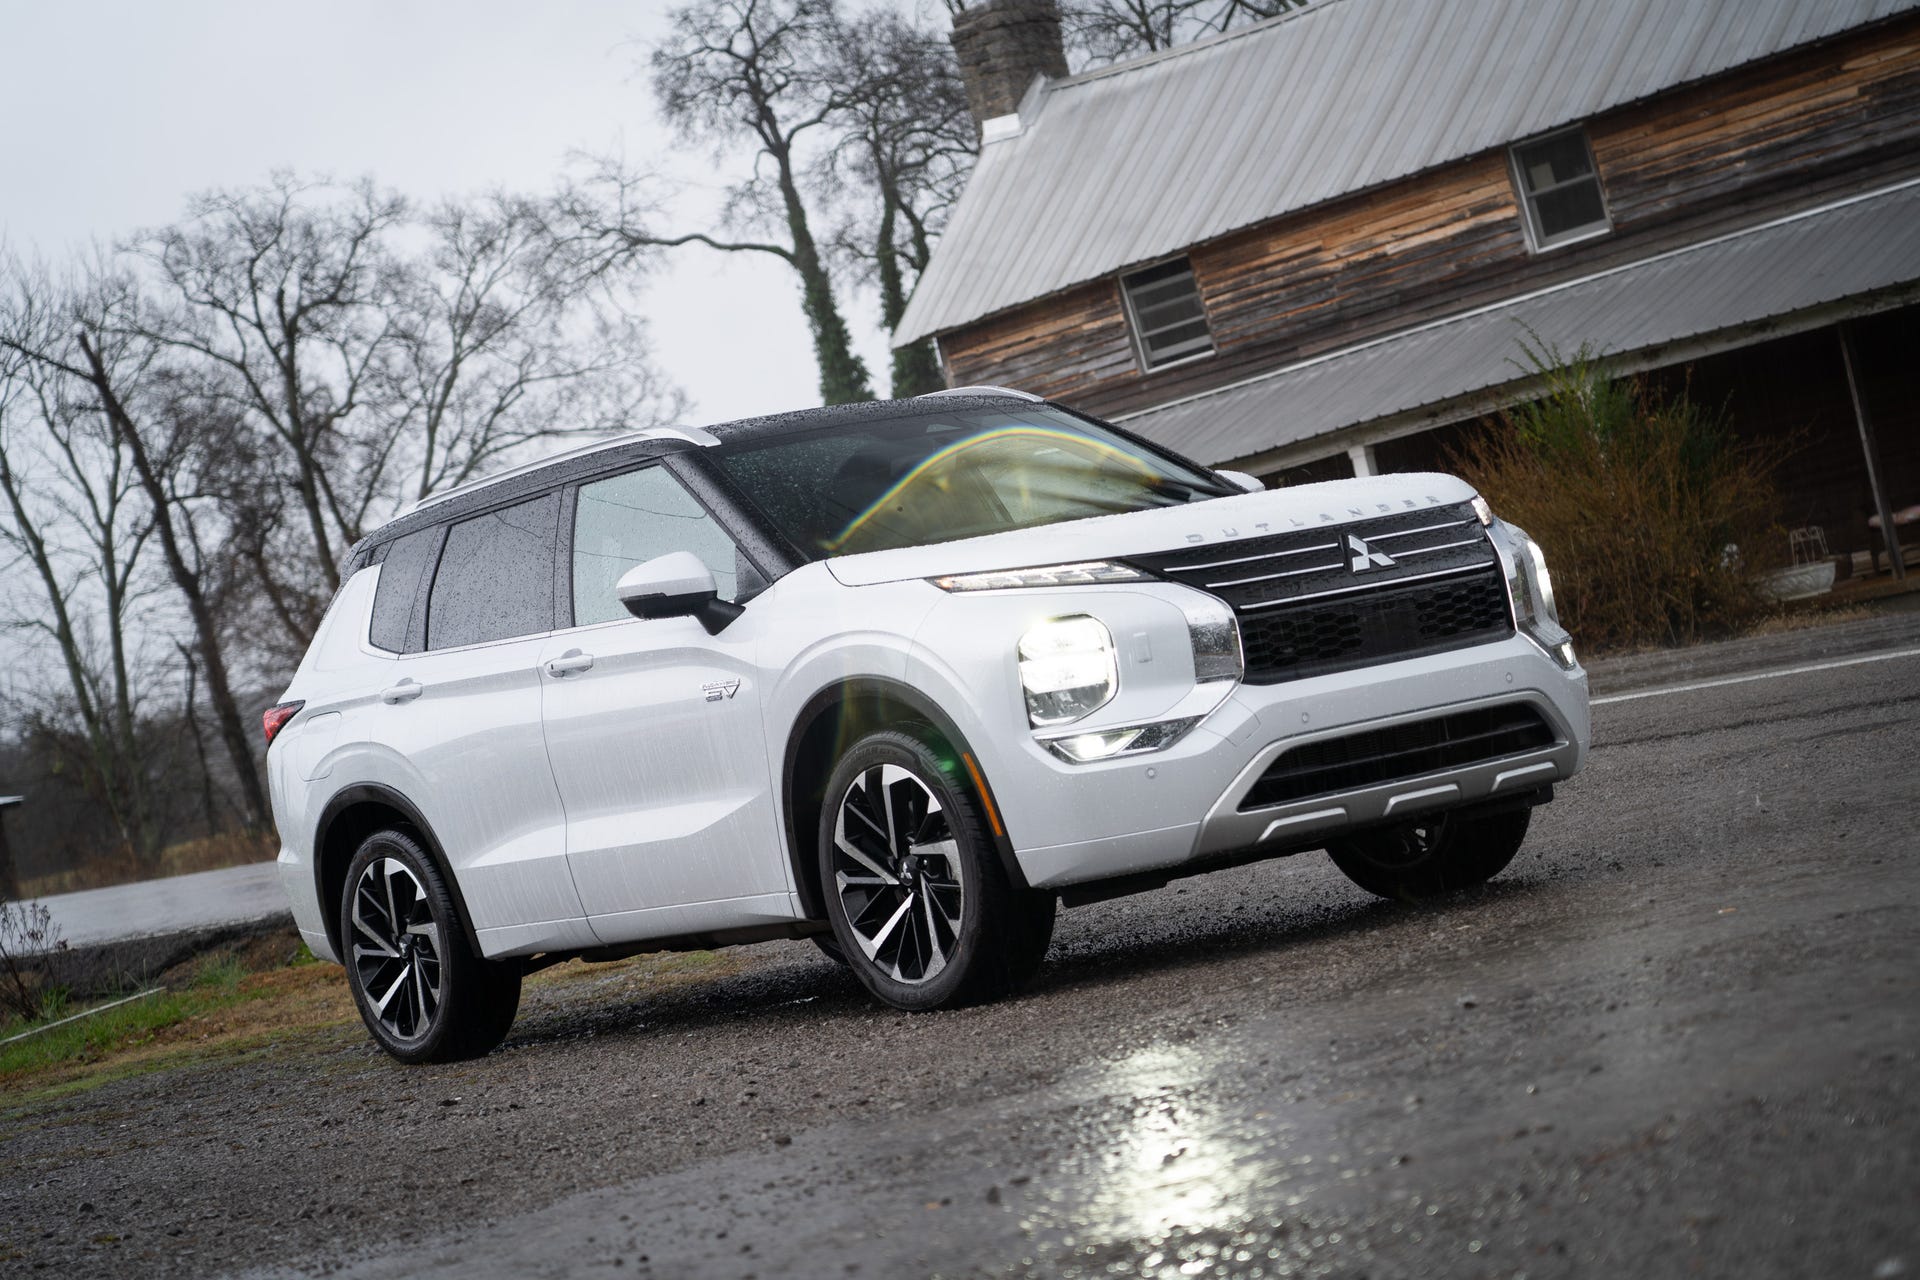 Car review: Mitsubishi Outlander PHEV